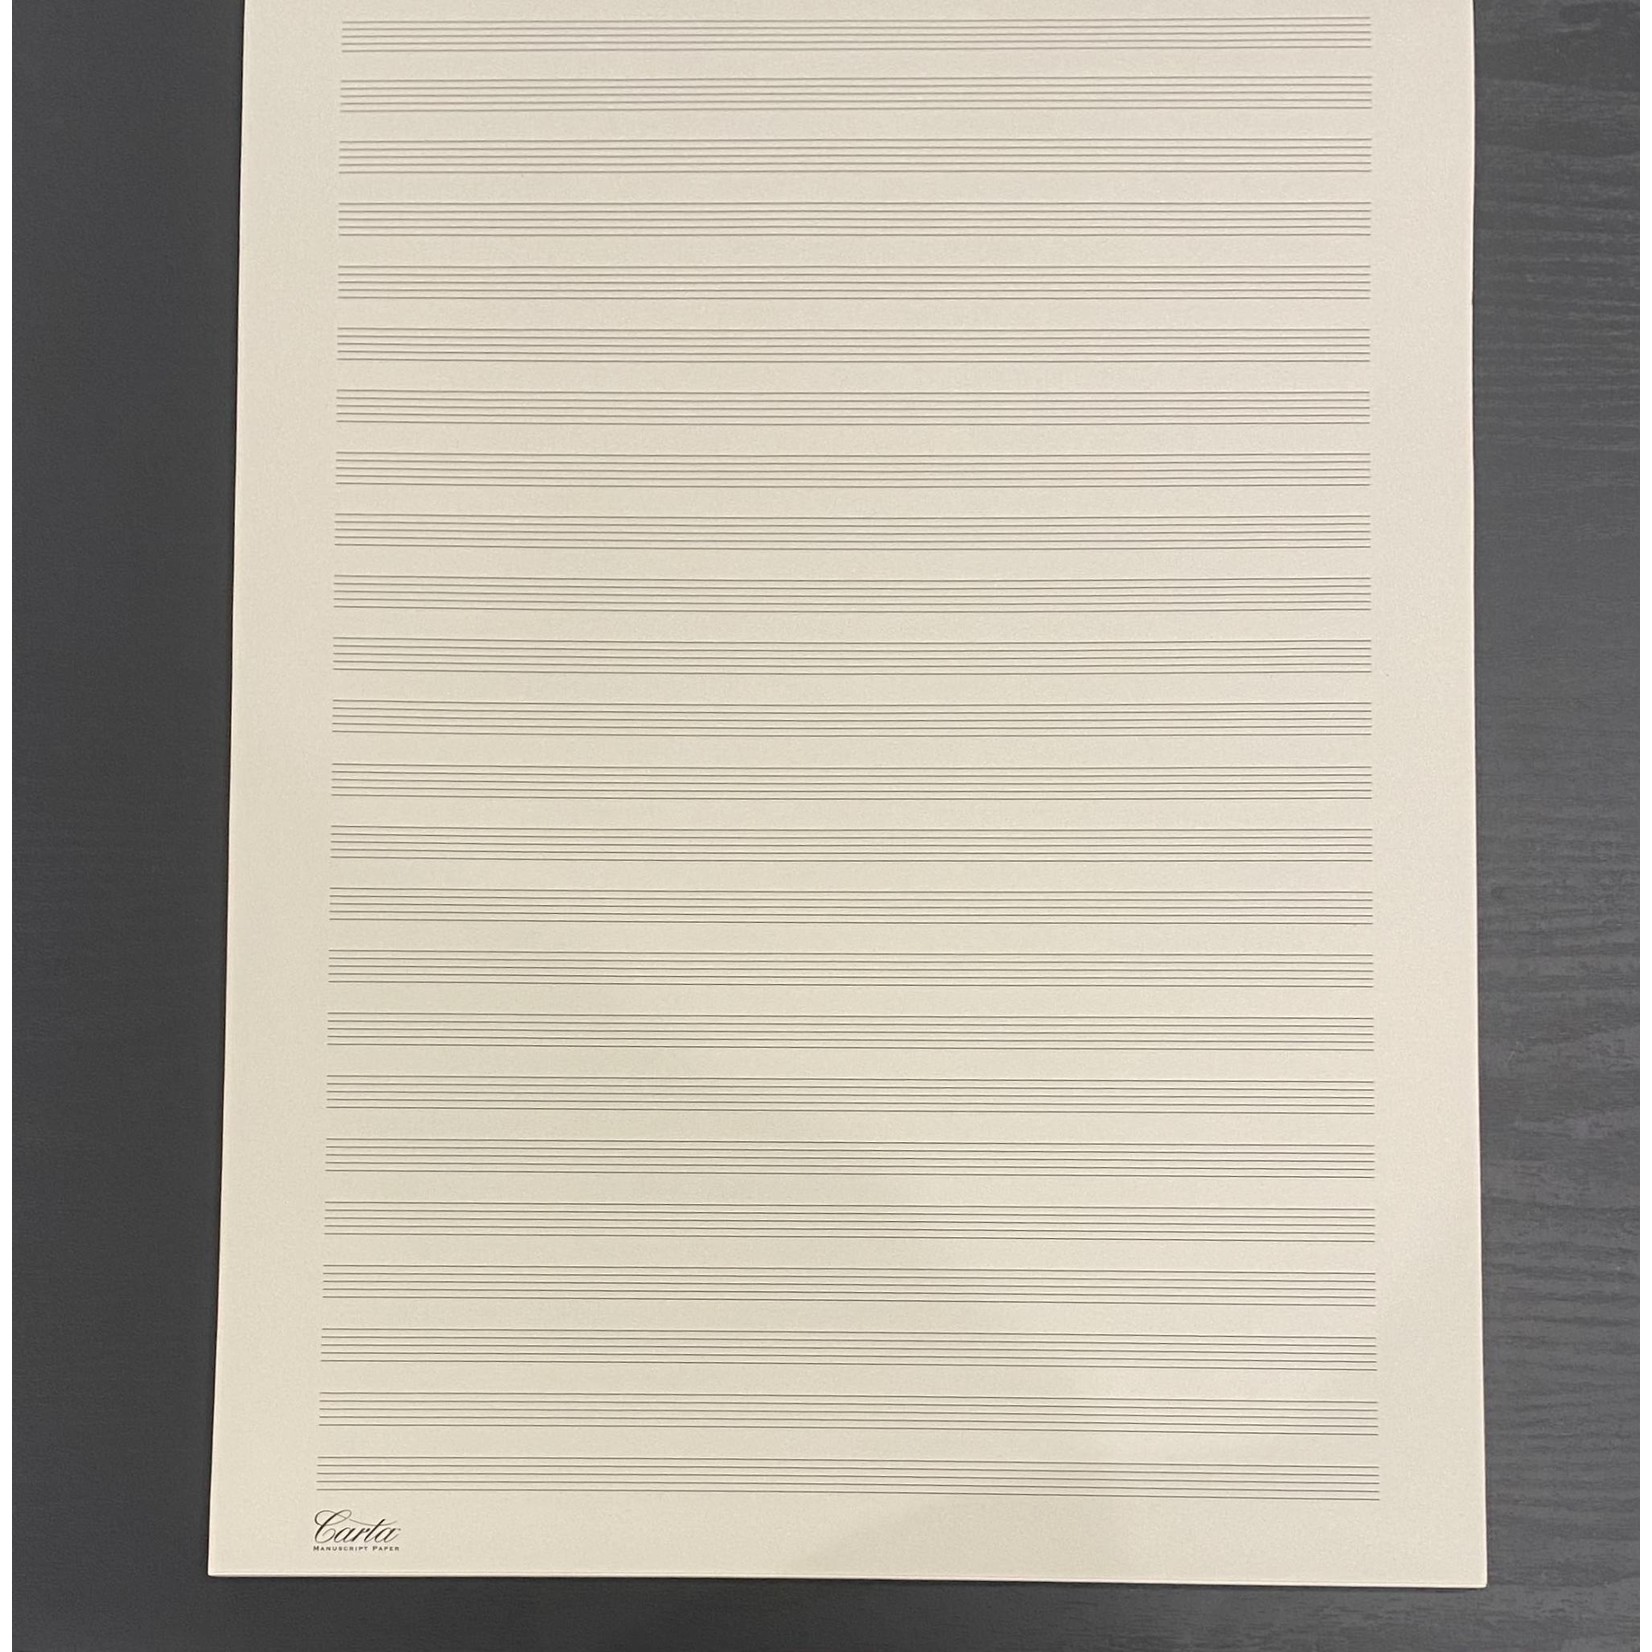 Manuscript Carta Orchestral Pad: No. 20, 24 staves/40 sheets portrait orientation (12" x 16")